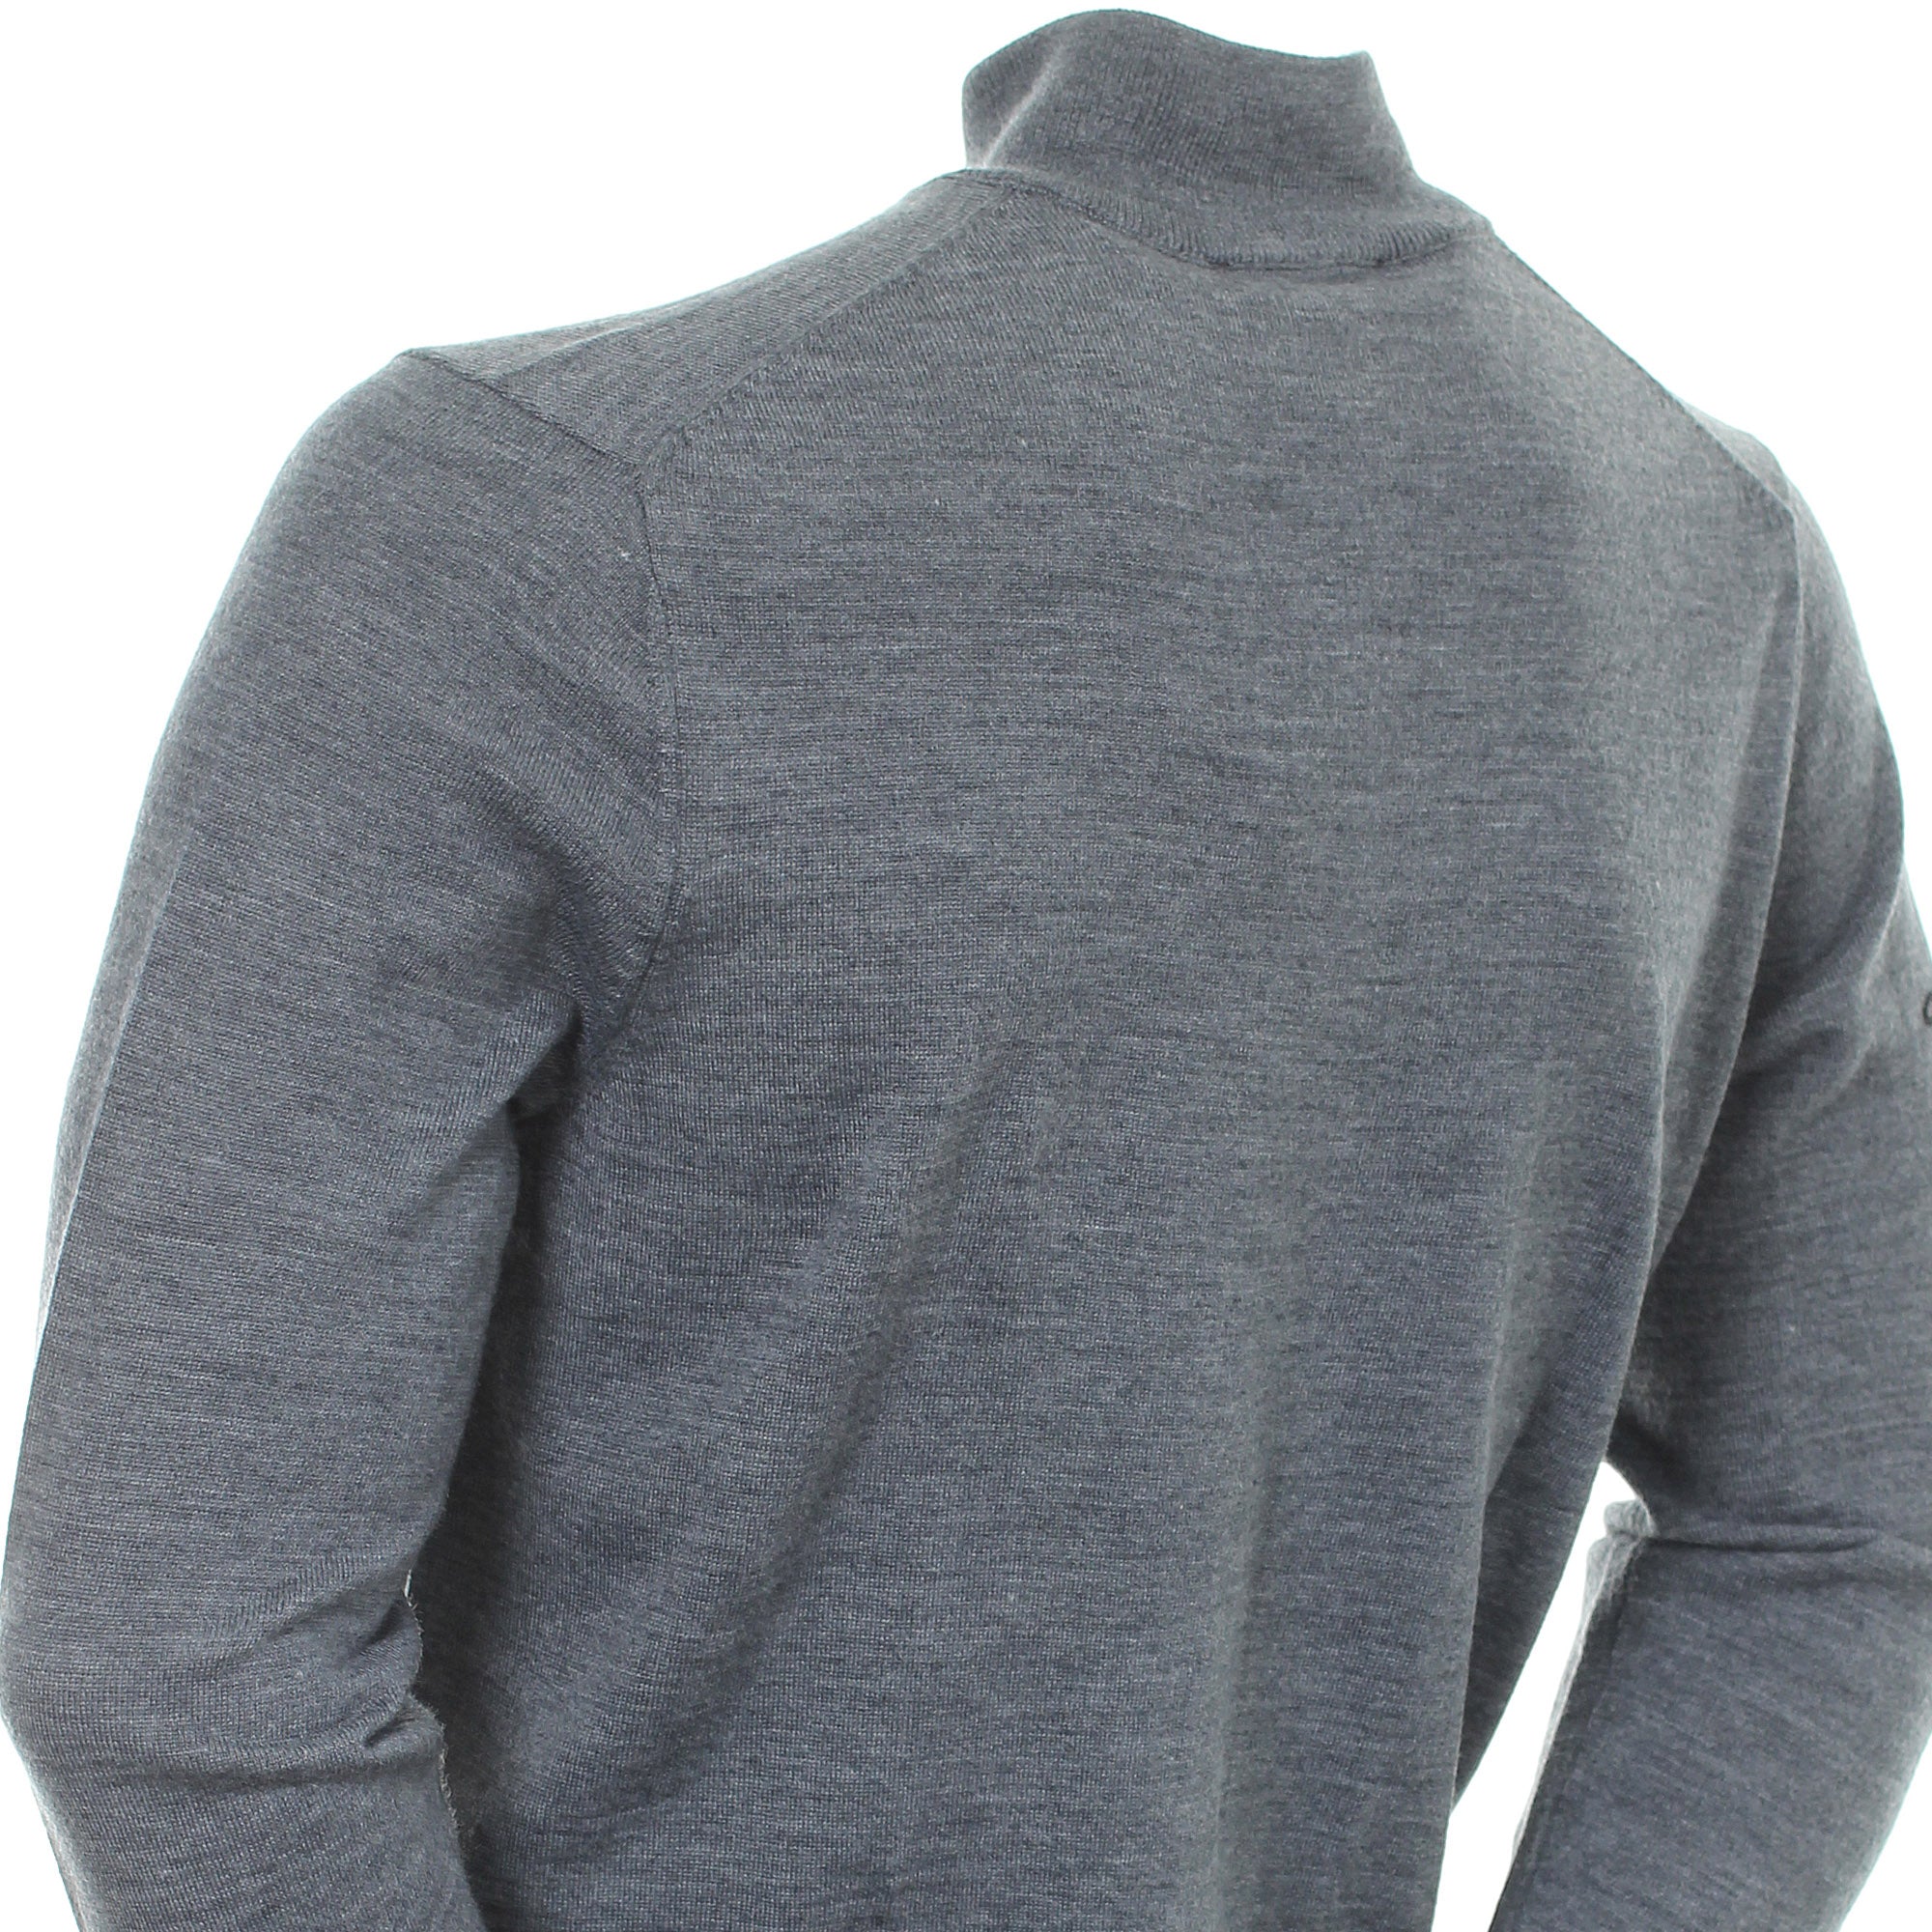 callaway-golf-blended-merino-1-4-zip-sweater-cggf80m1-steel-heather